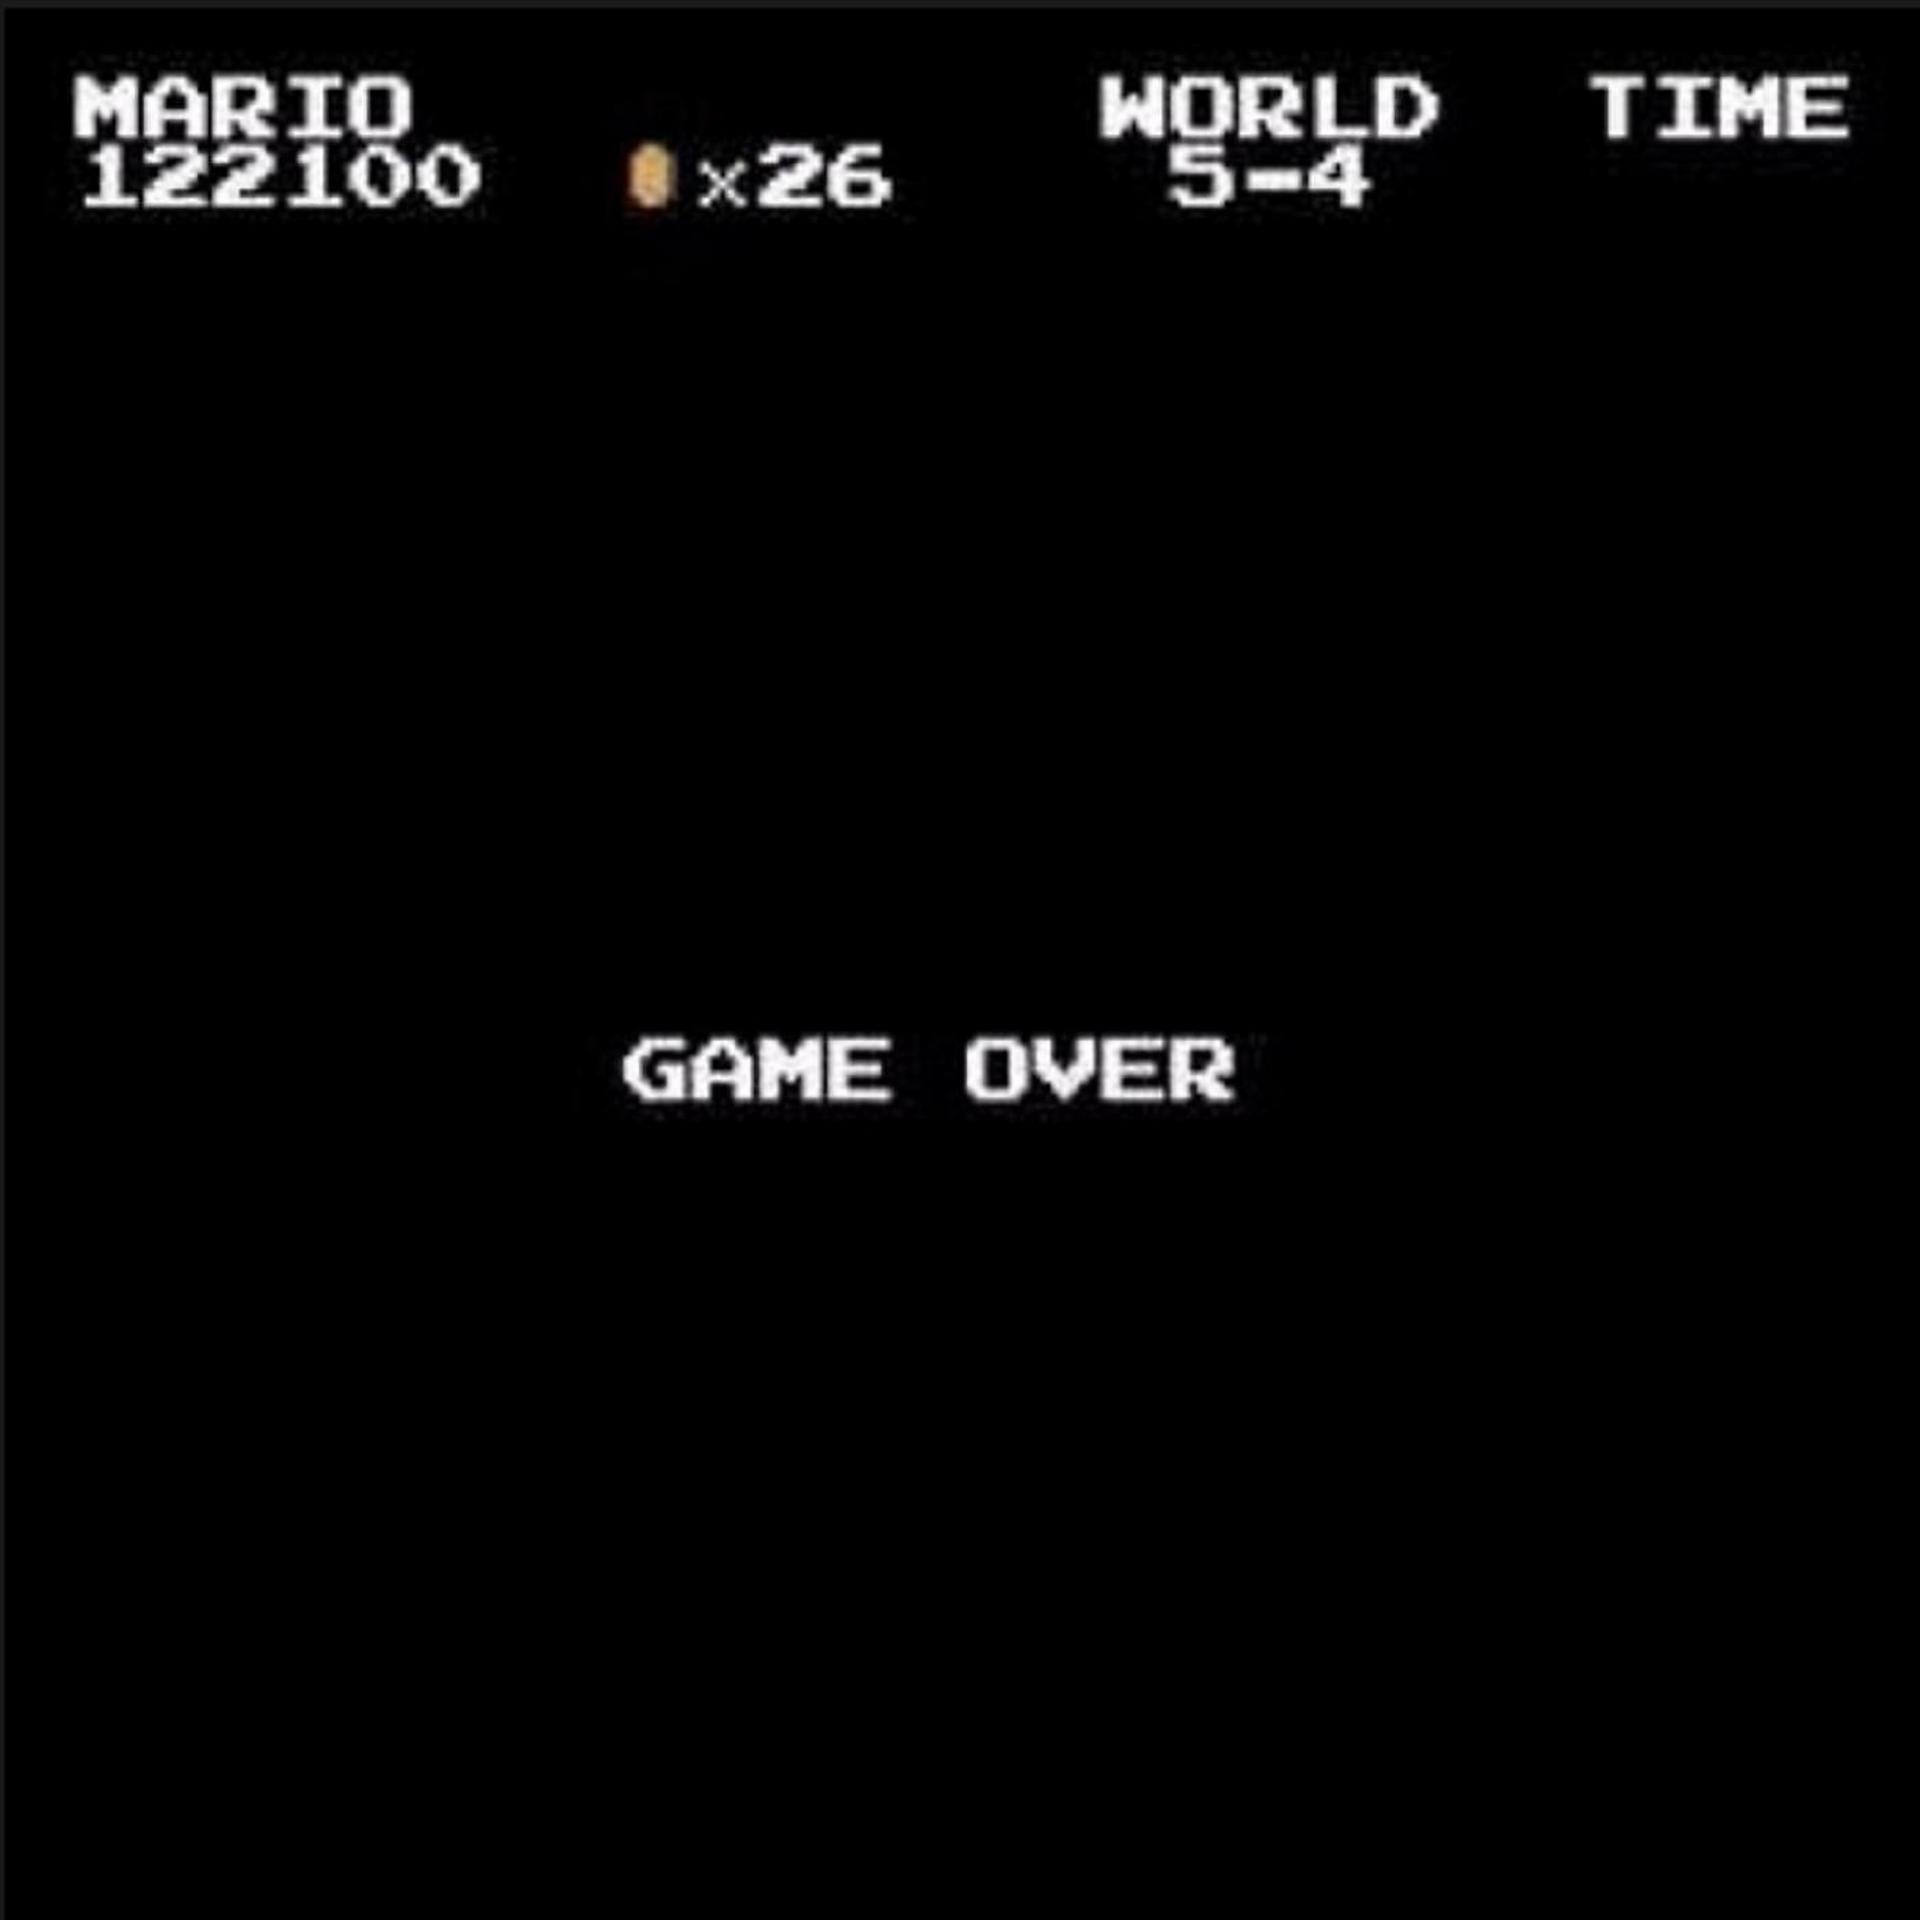 When the day is over. Game over. Game over на черном фоне. Марио гейм овер. Game over в игре.